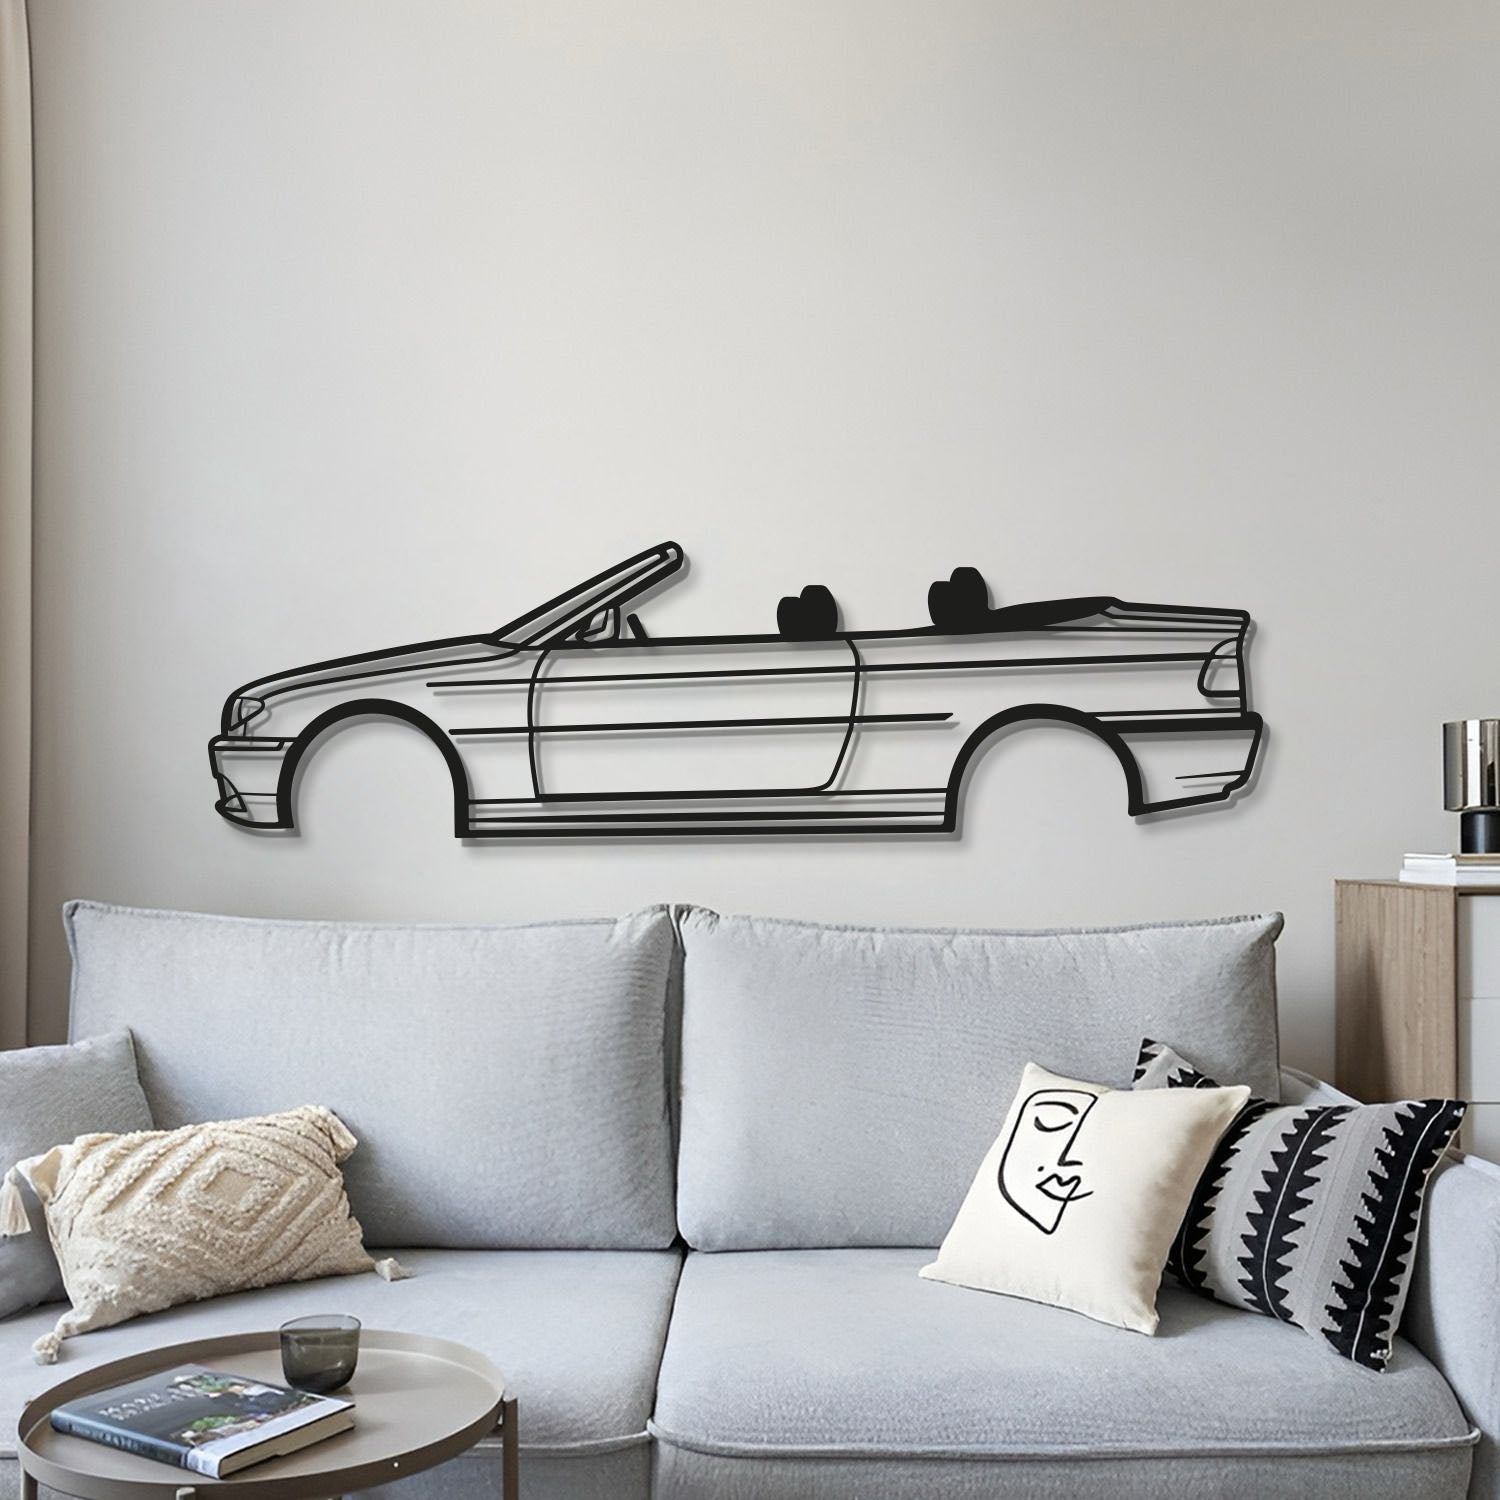 E46 CABRIO Metal Car Wall Art - MT0953